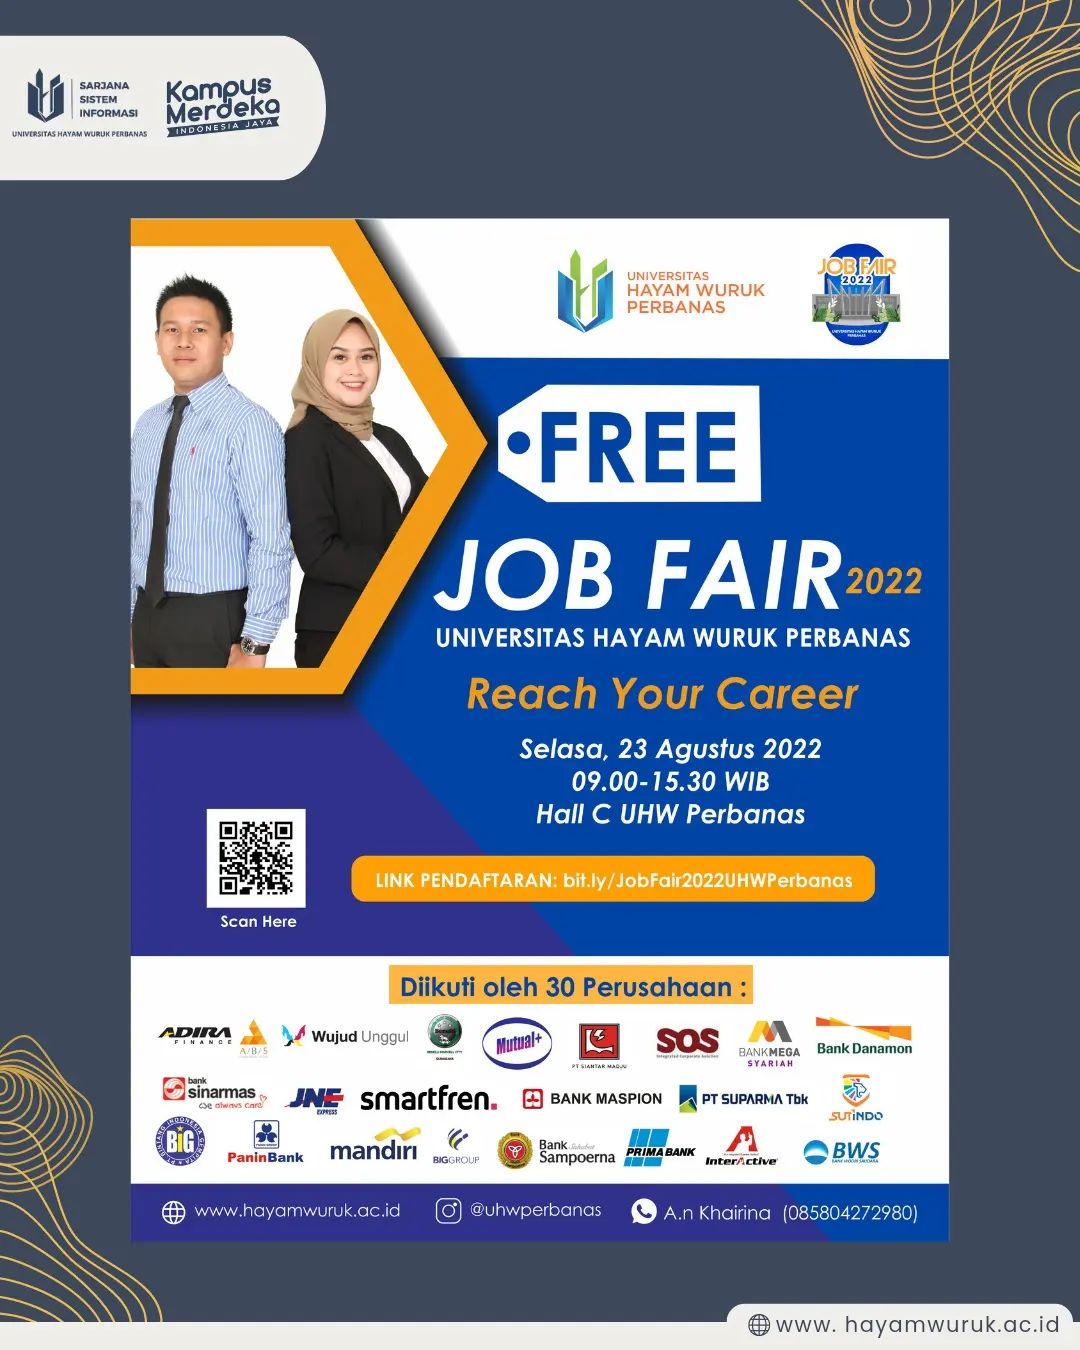 Universitas Hayam Wuruk Perbanas Job Fair 2022 - Surabaya